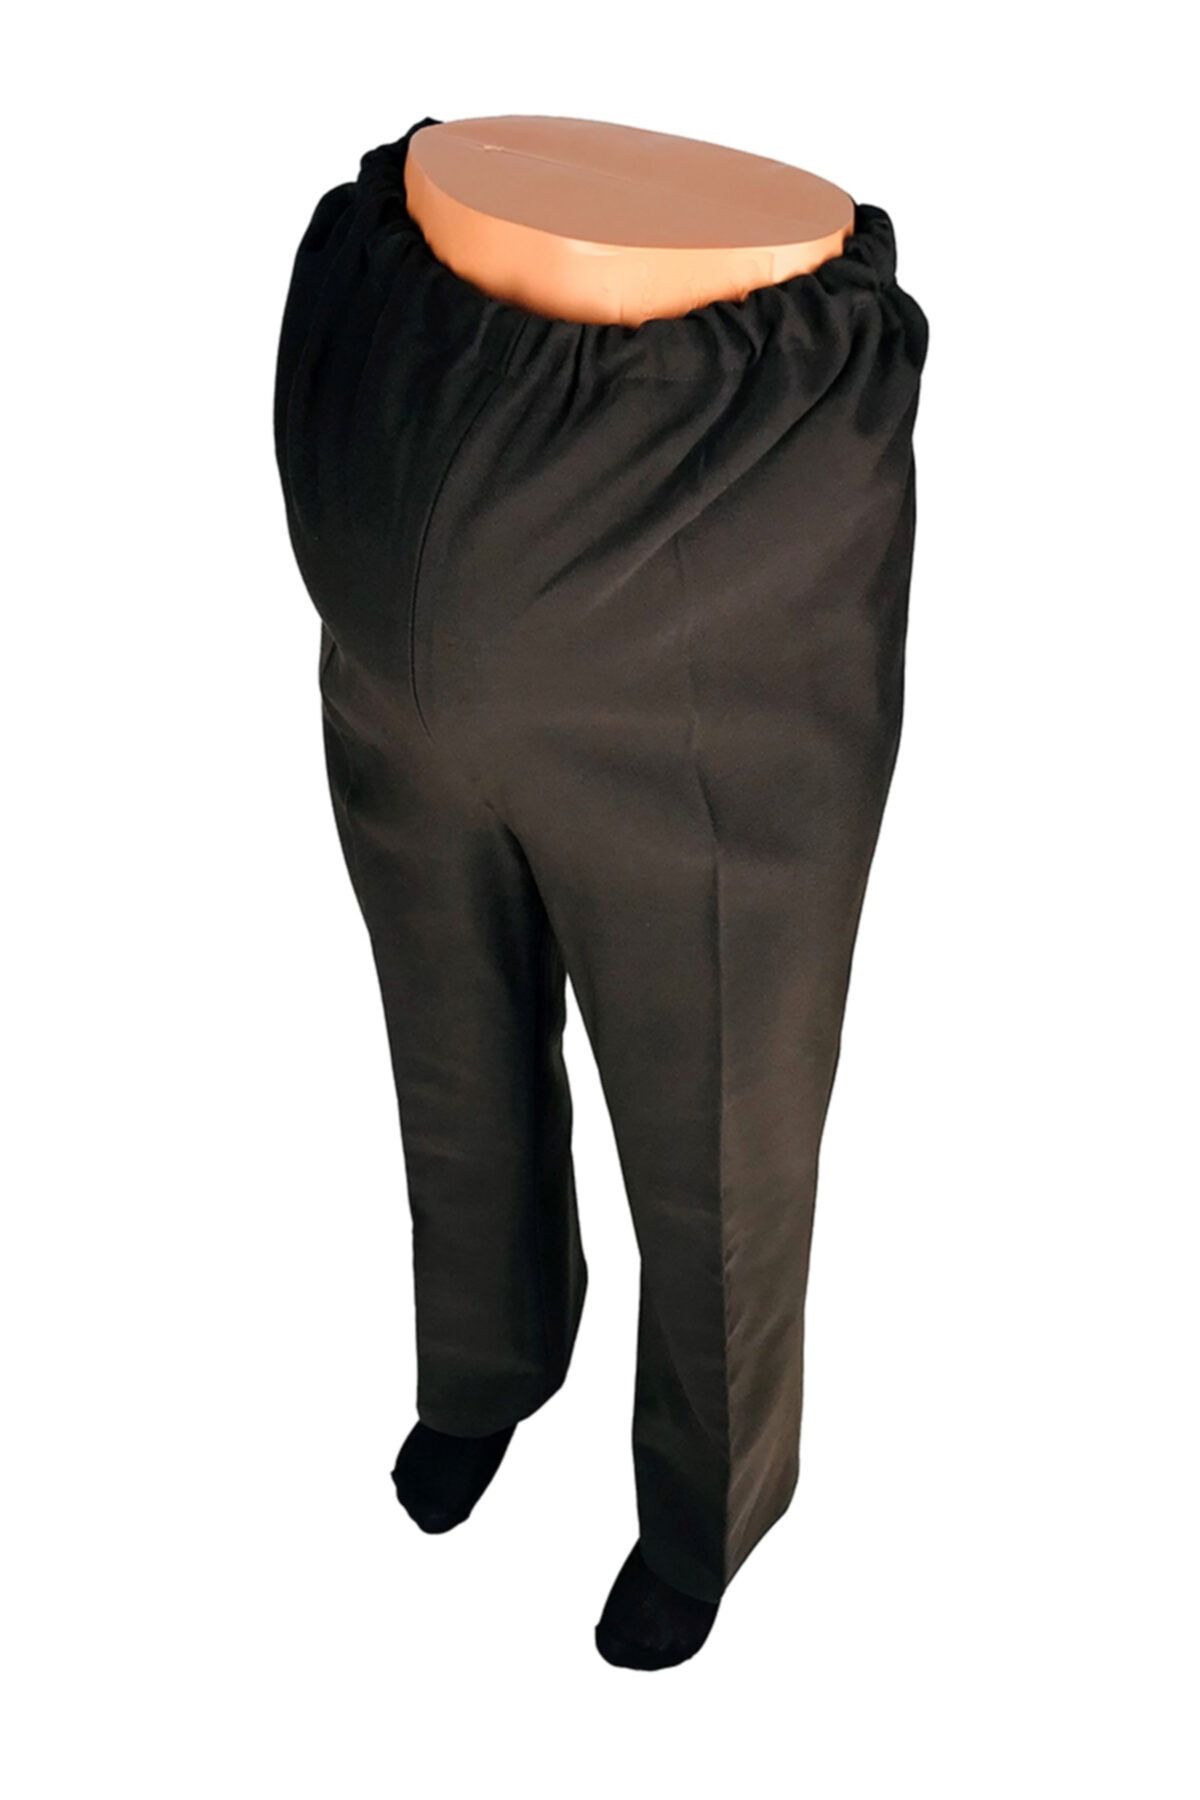 sny Boru Paça Rahat Kalıp Pamuklu Düz Renk Belden Lastik Ayarlı Kahverengi Hamile Pantolon